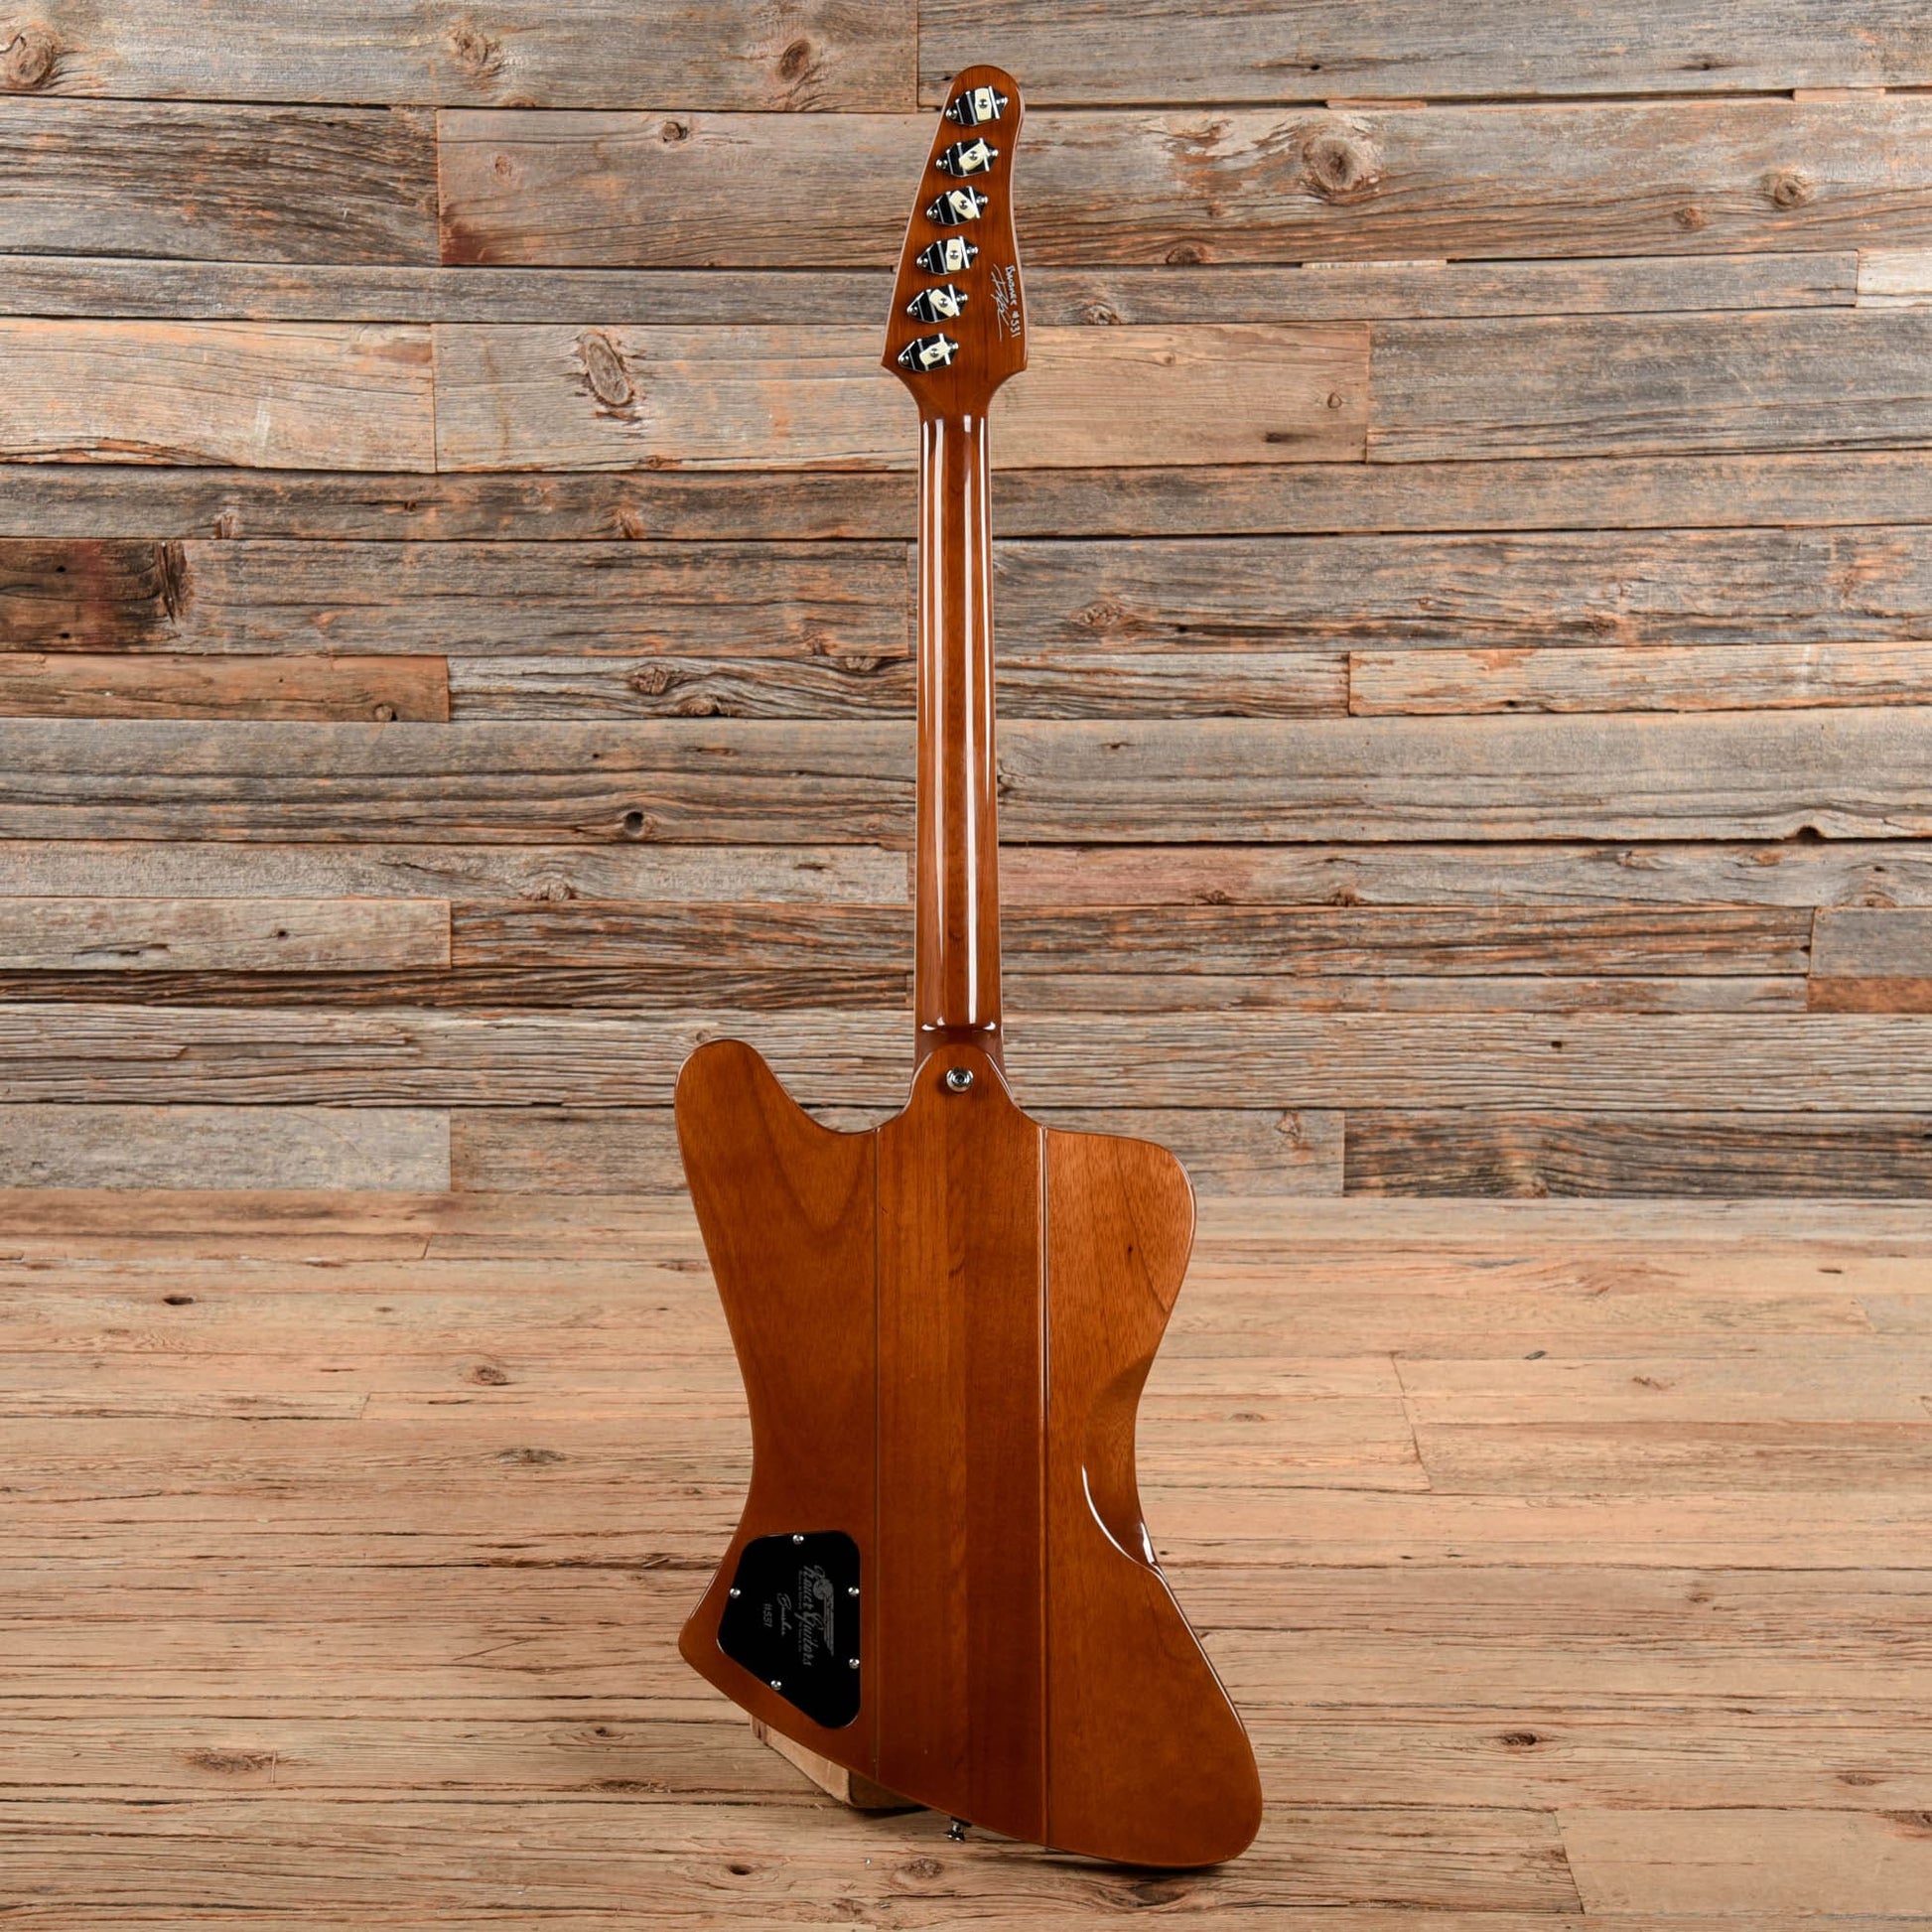 Kauer Banshee Jr. Black 2022 Electric Guitars / Solid Body